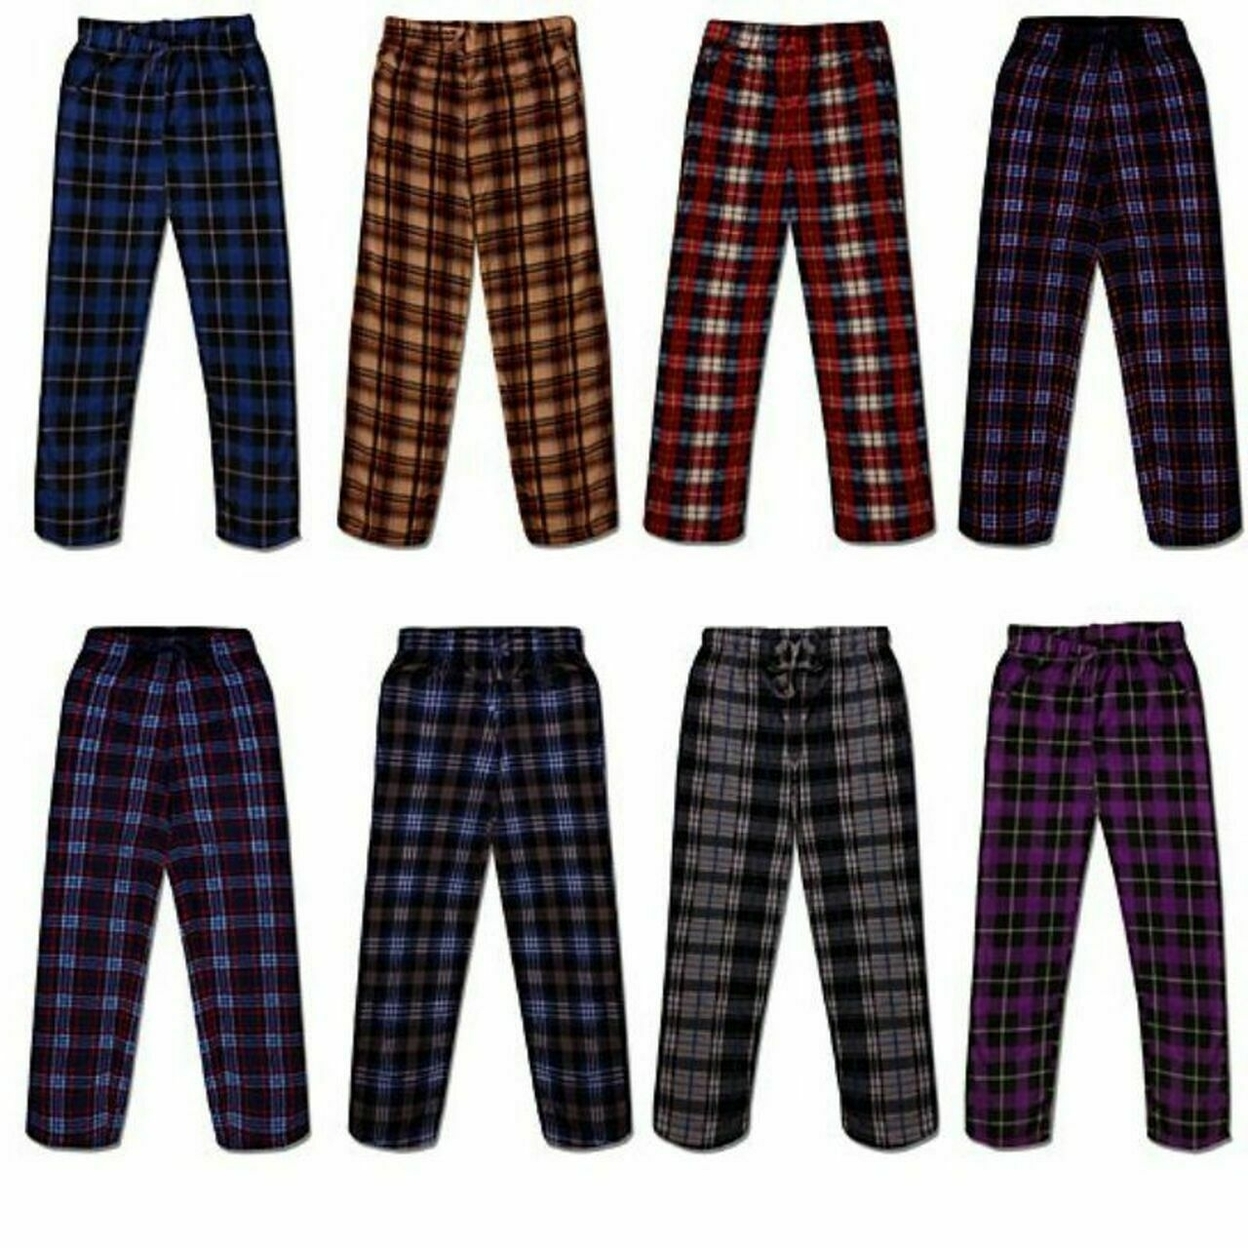 2-Pack: Men's Ultra Soft Cozy Flannel Fleece Plaid Pajama Sleep Bottom Lounge Pants - Red & Grey, Large